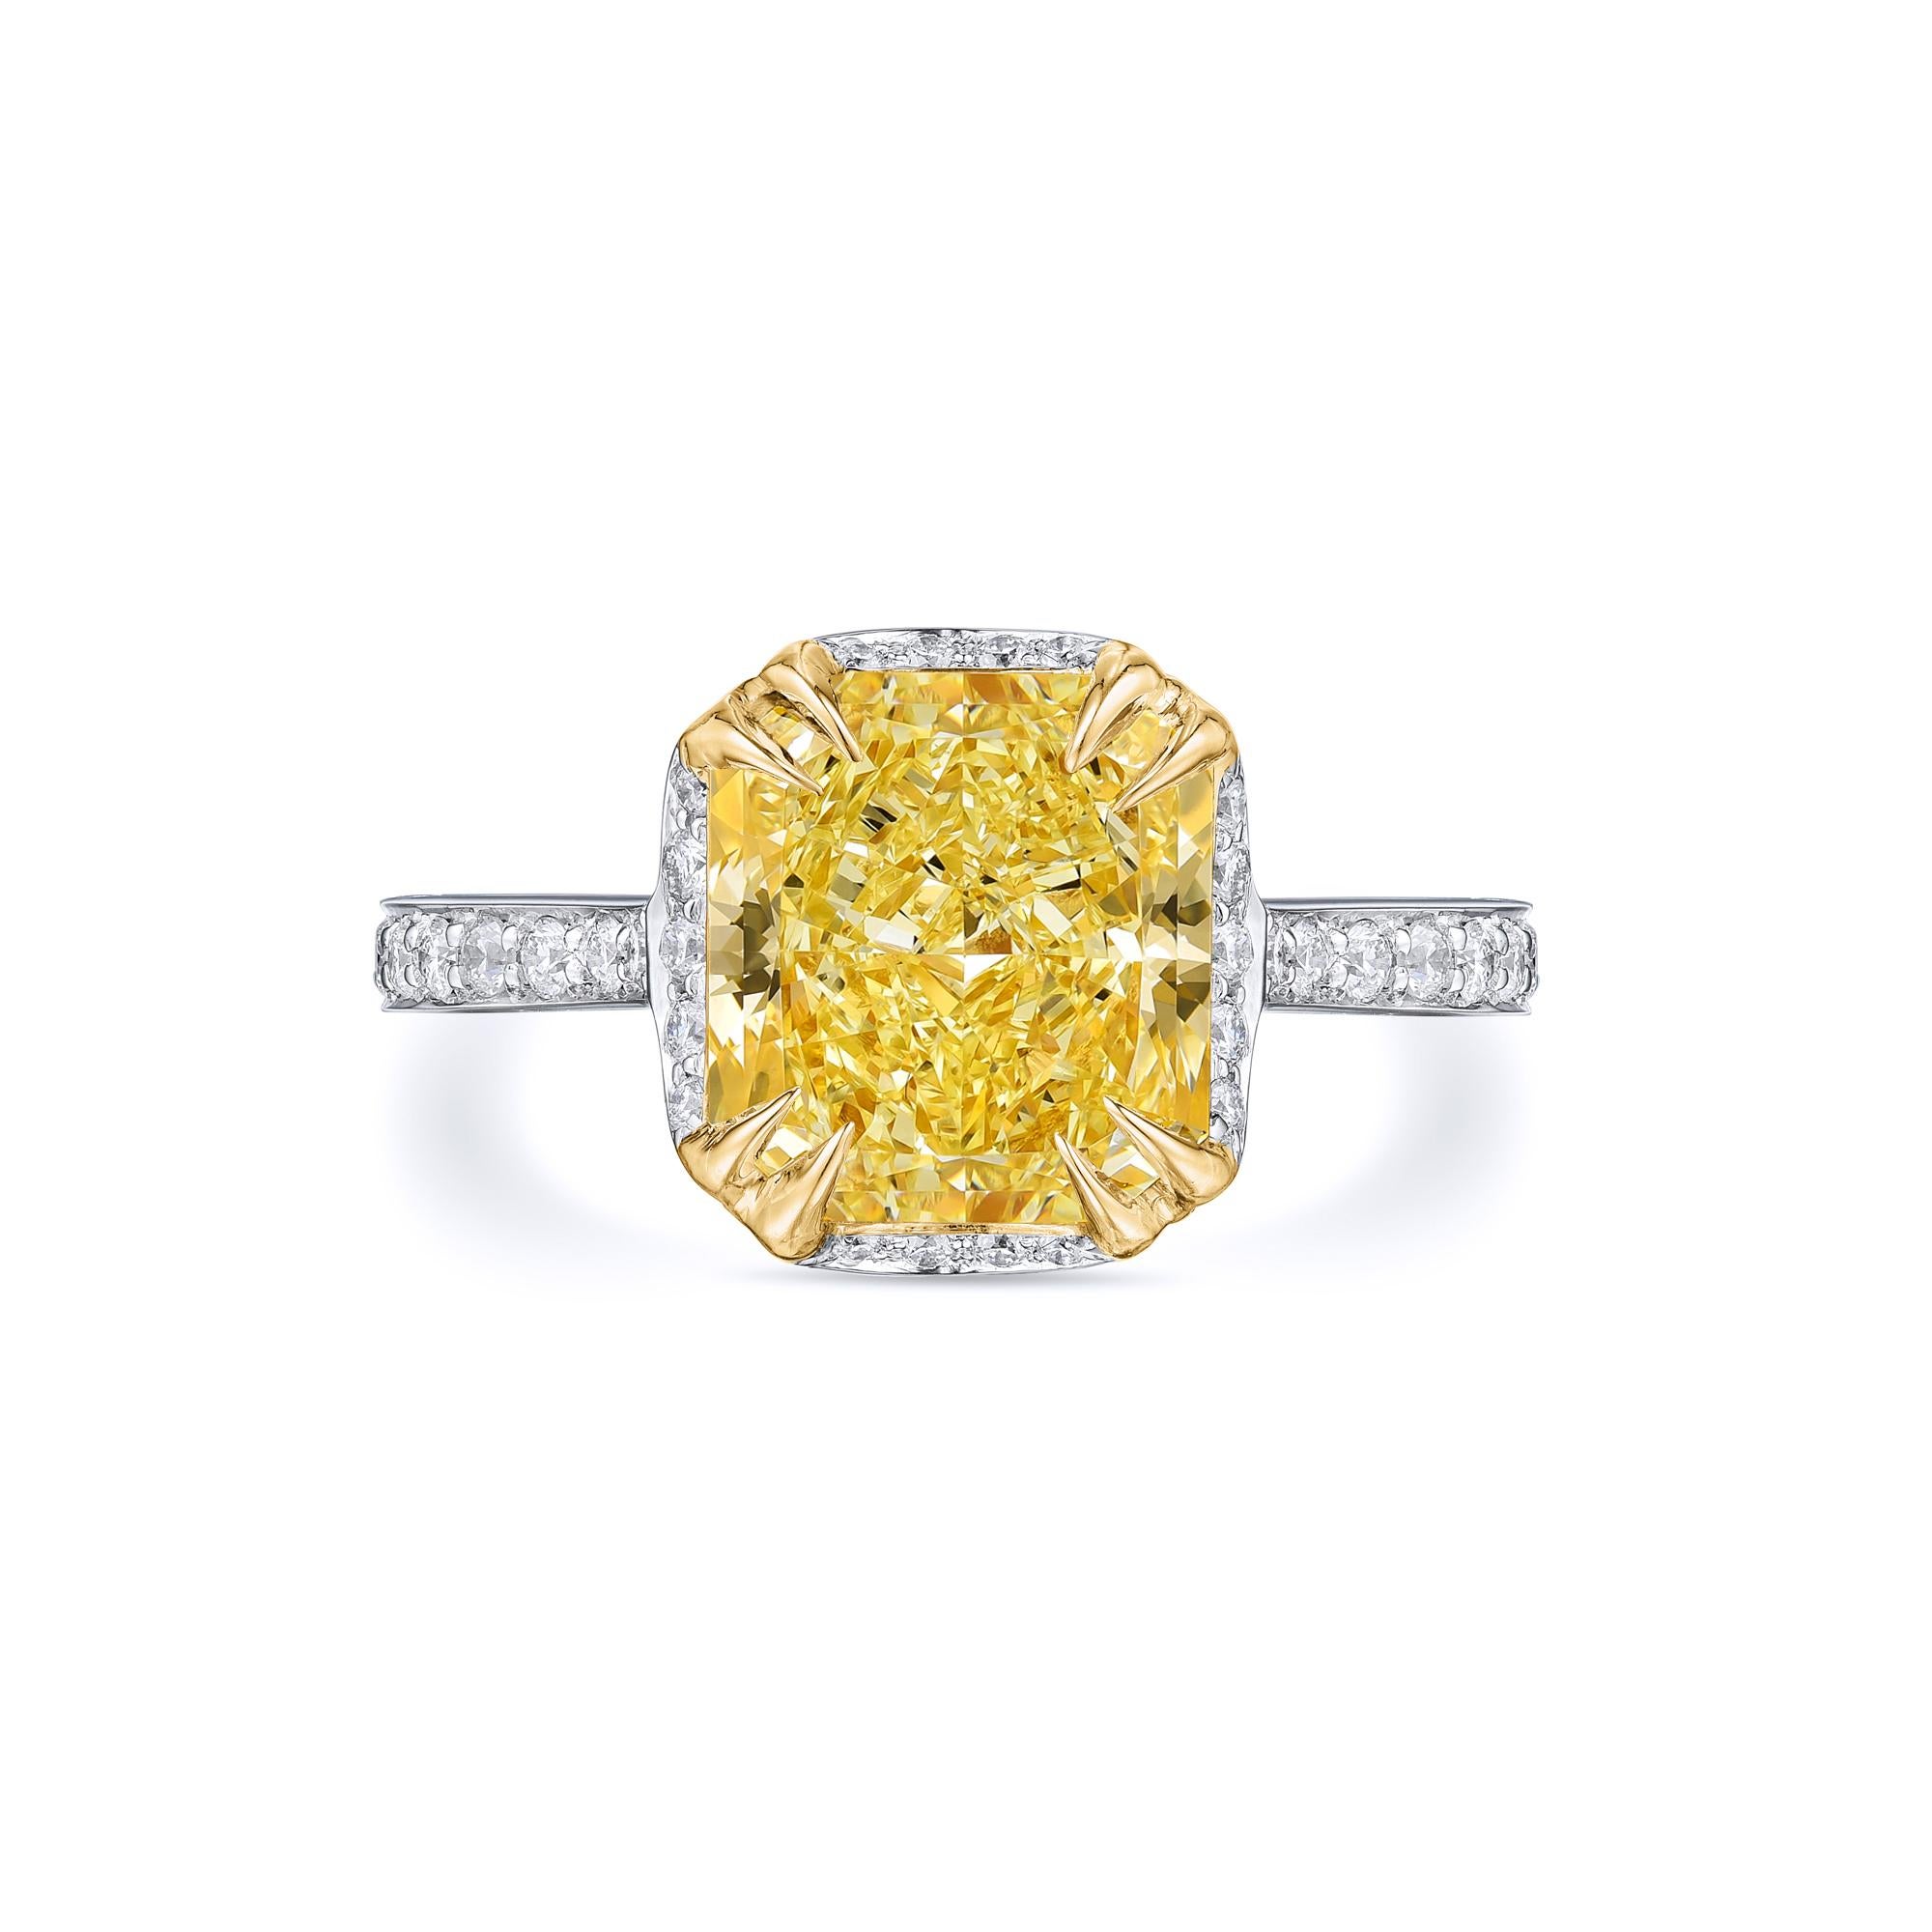 GIA Certified 2.33 Carat Fancy Yellow Radiant Diamond Ring in Platinum 1